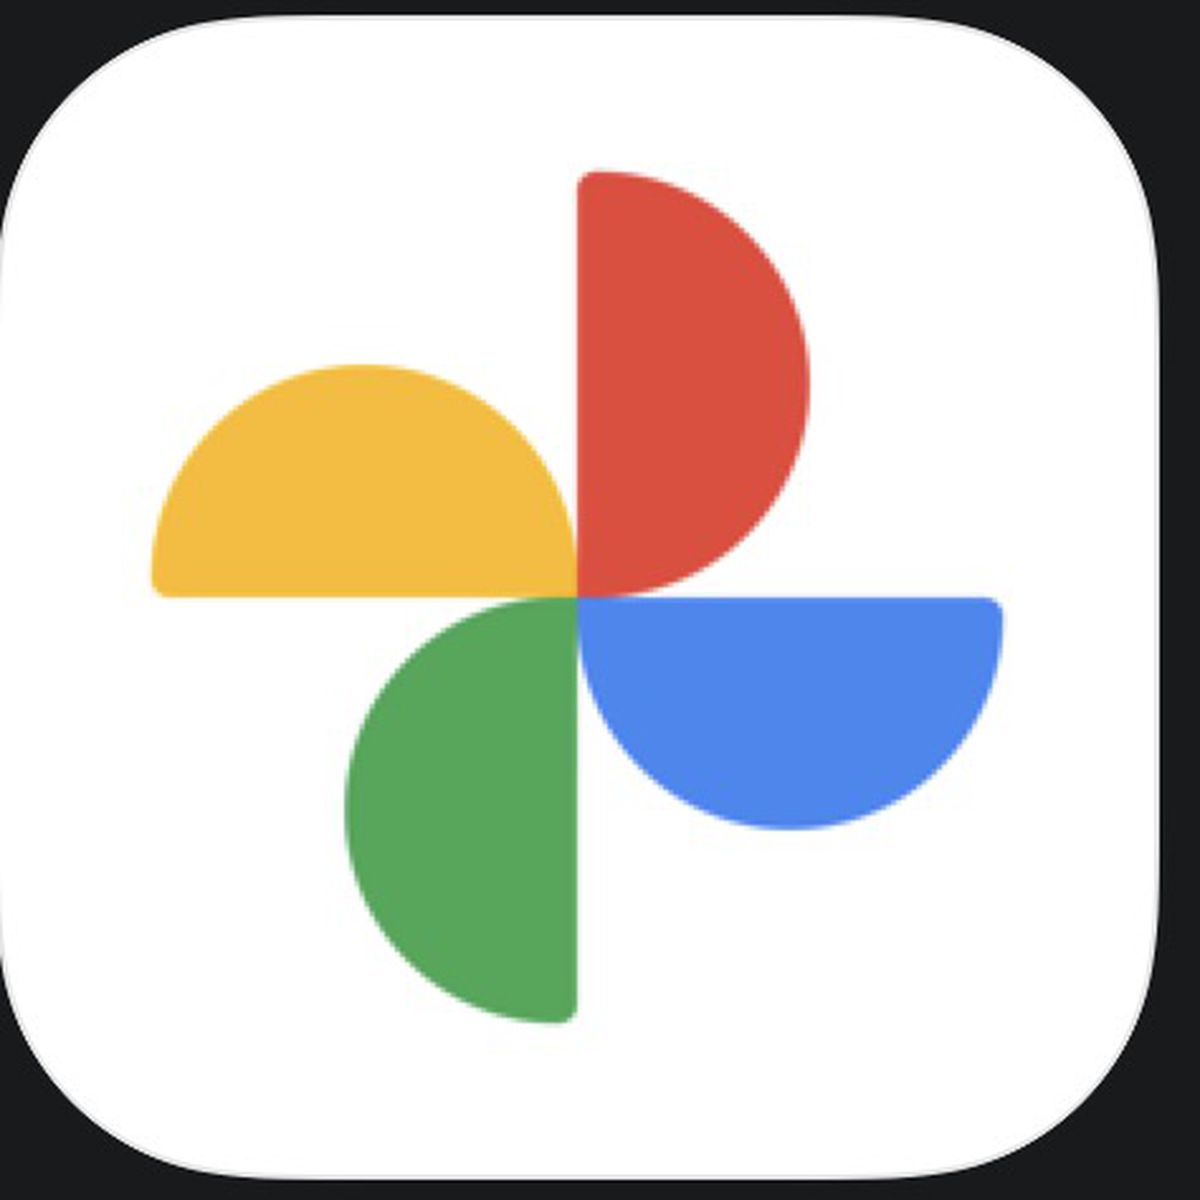 Google Photos Stops Backing Up Social Media Folders By Default - MacRumors